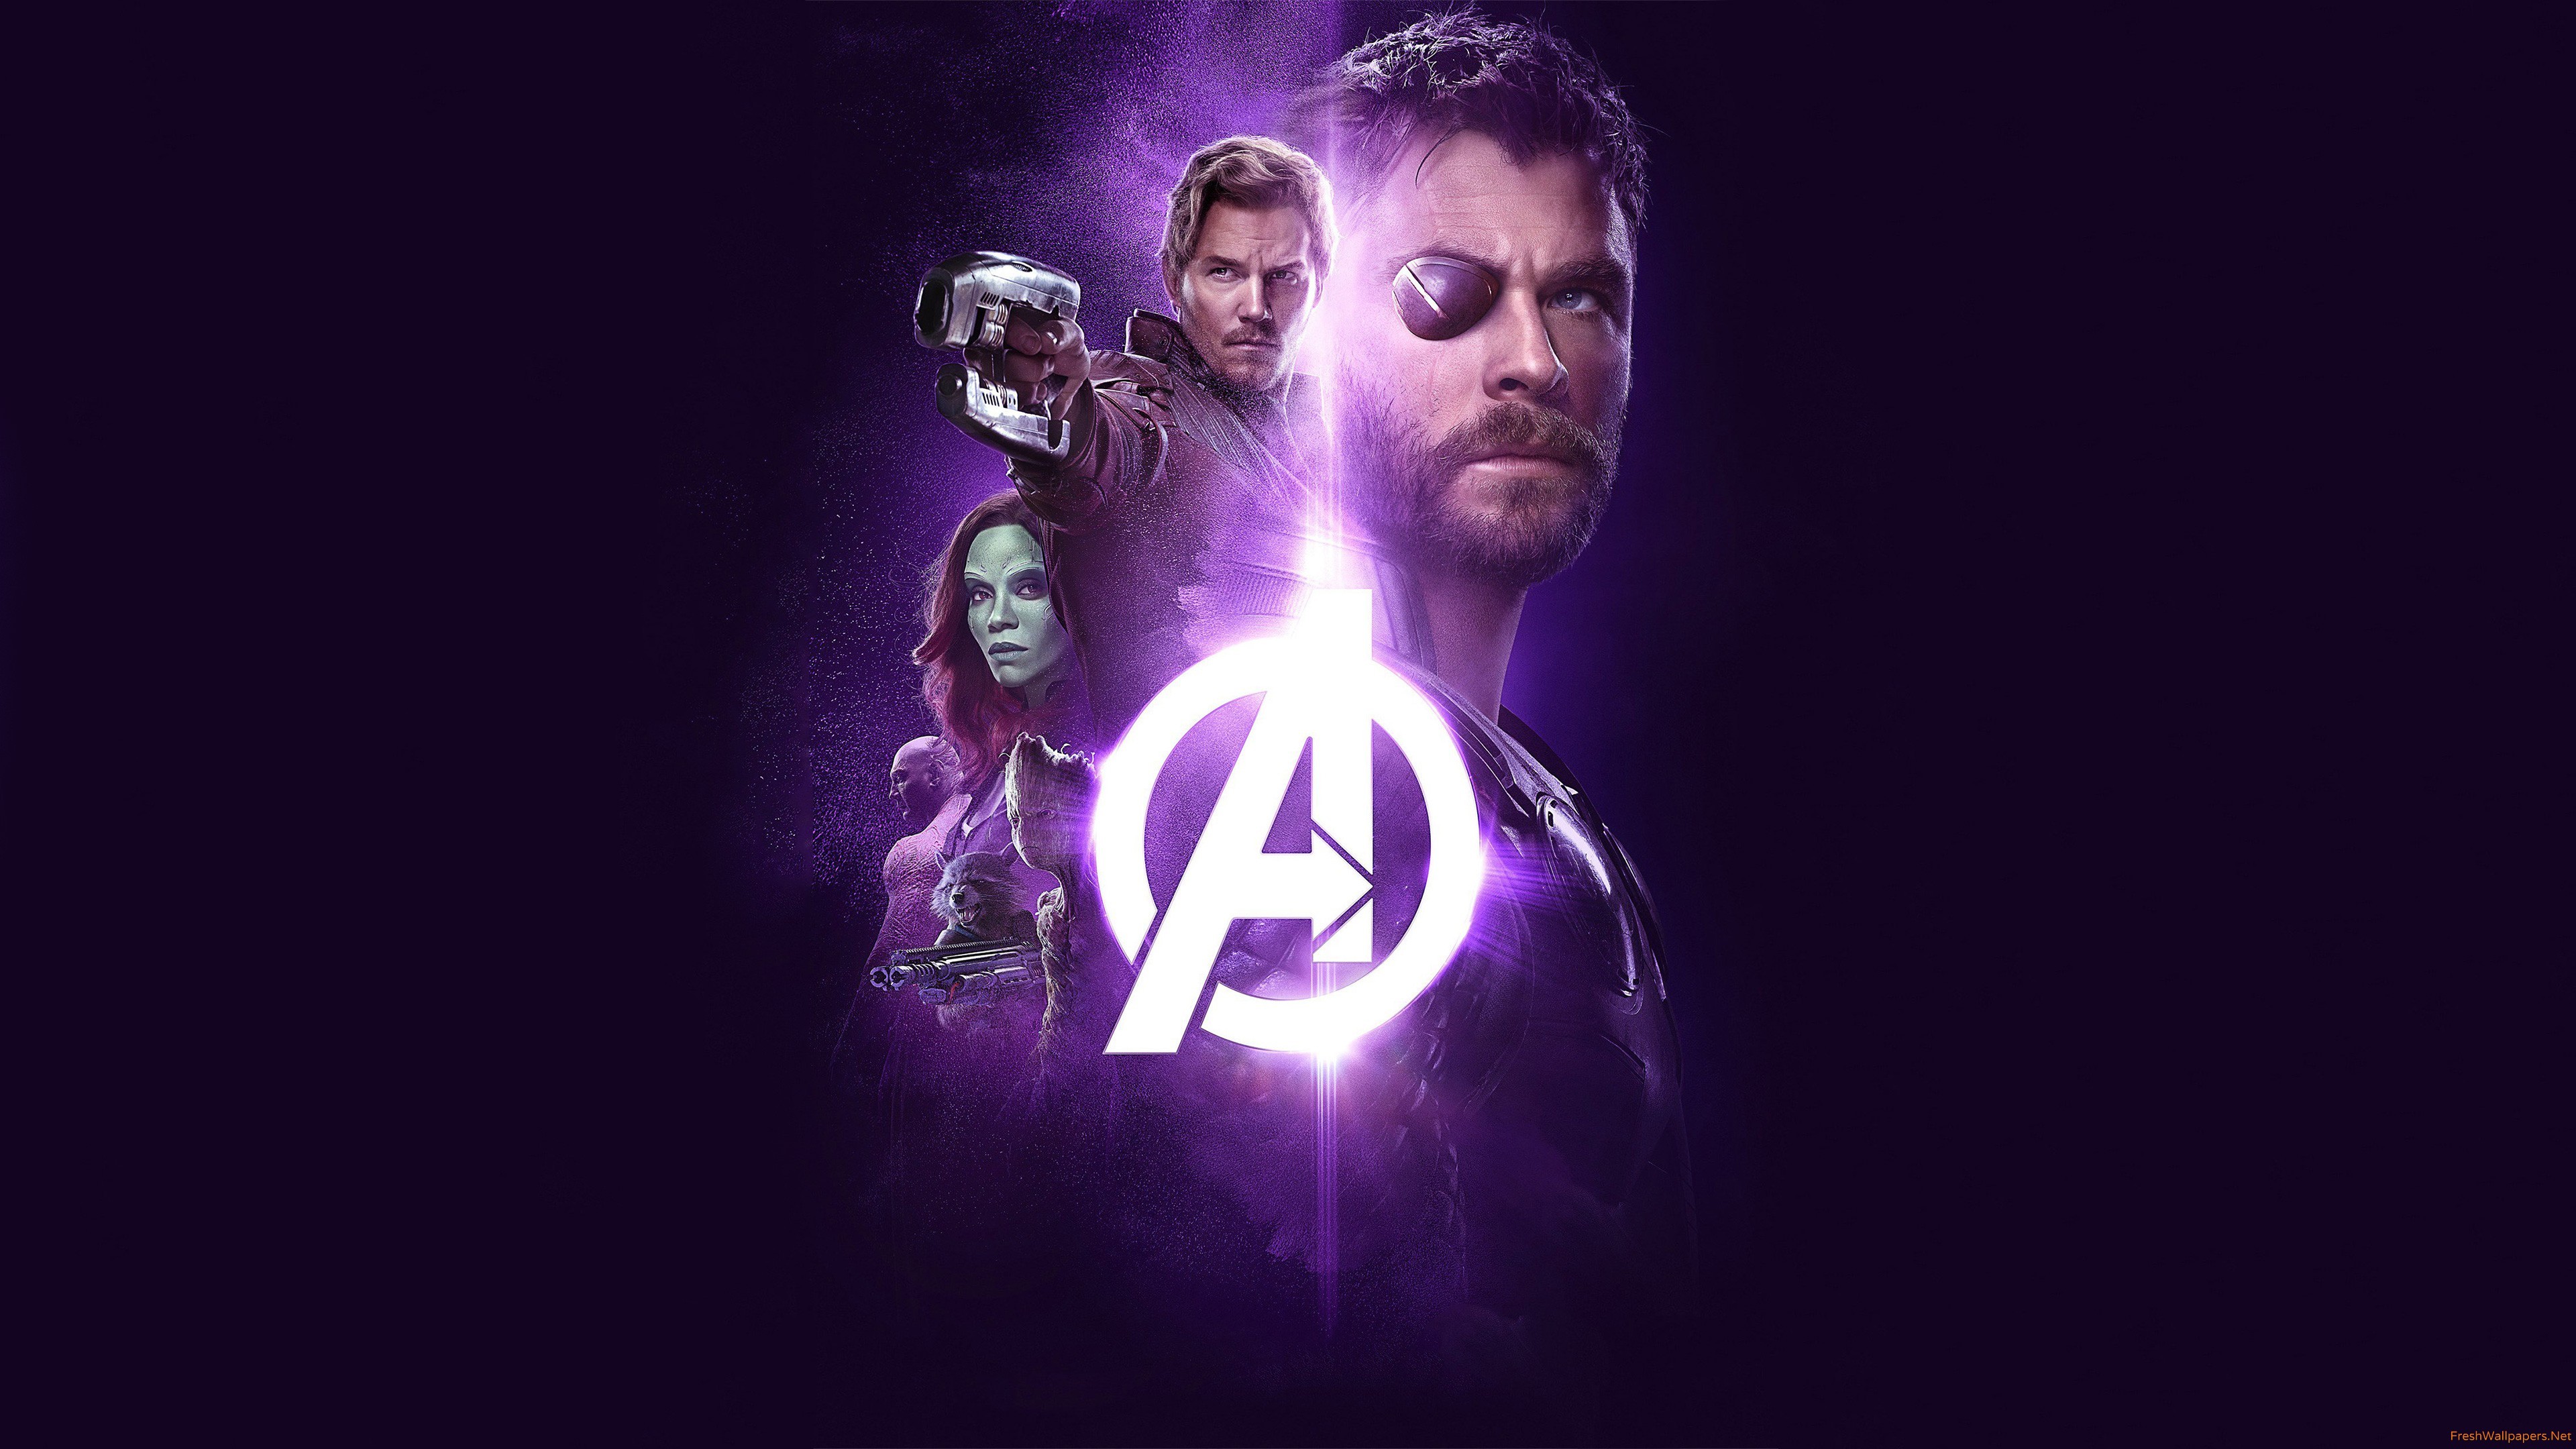 Avengers Infinity War Thor Groot Rocket Star Lord Gamora 4k Wallpaper Download High Resolution 4k Wallpaper